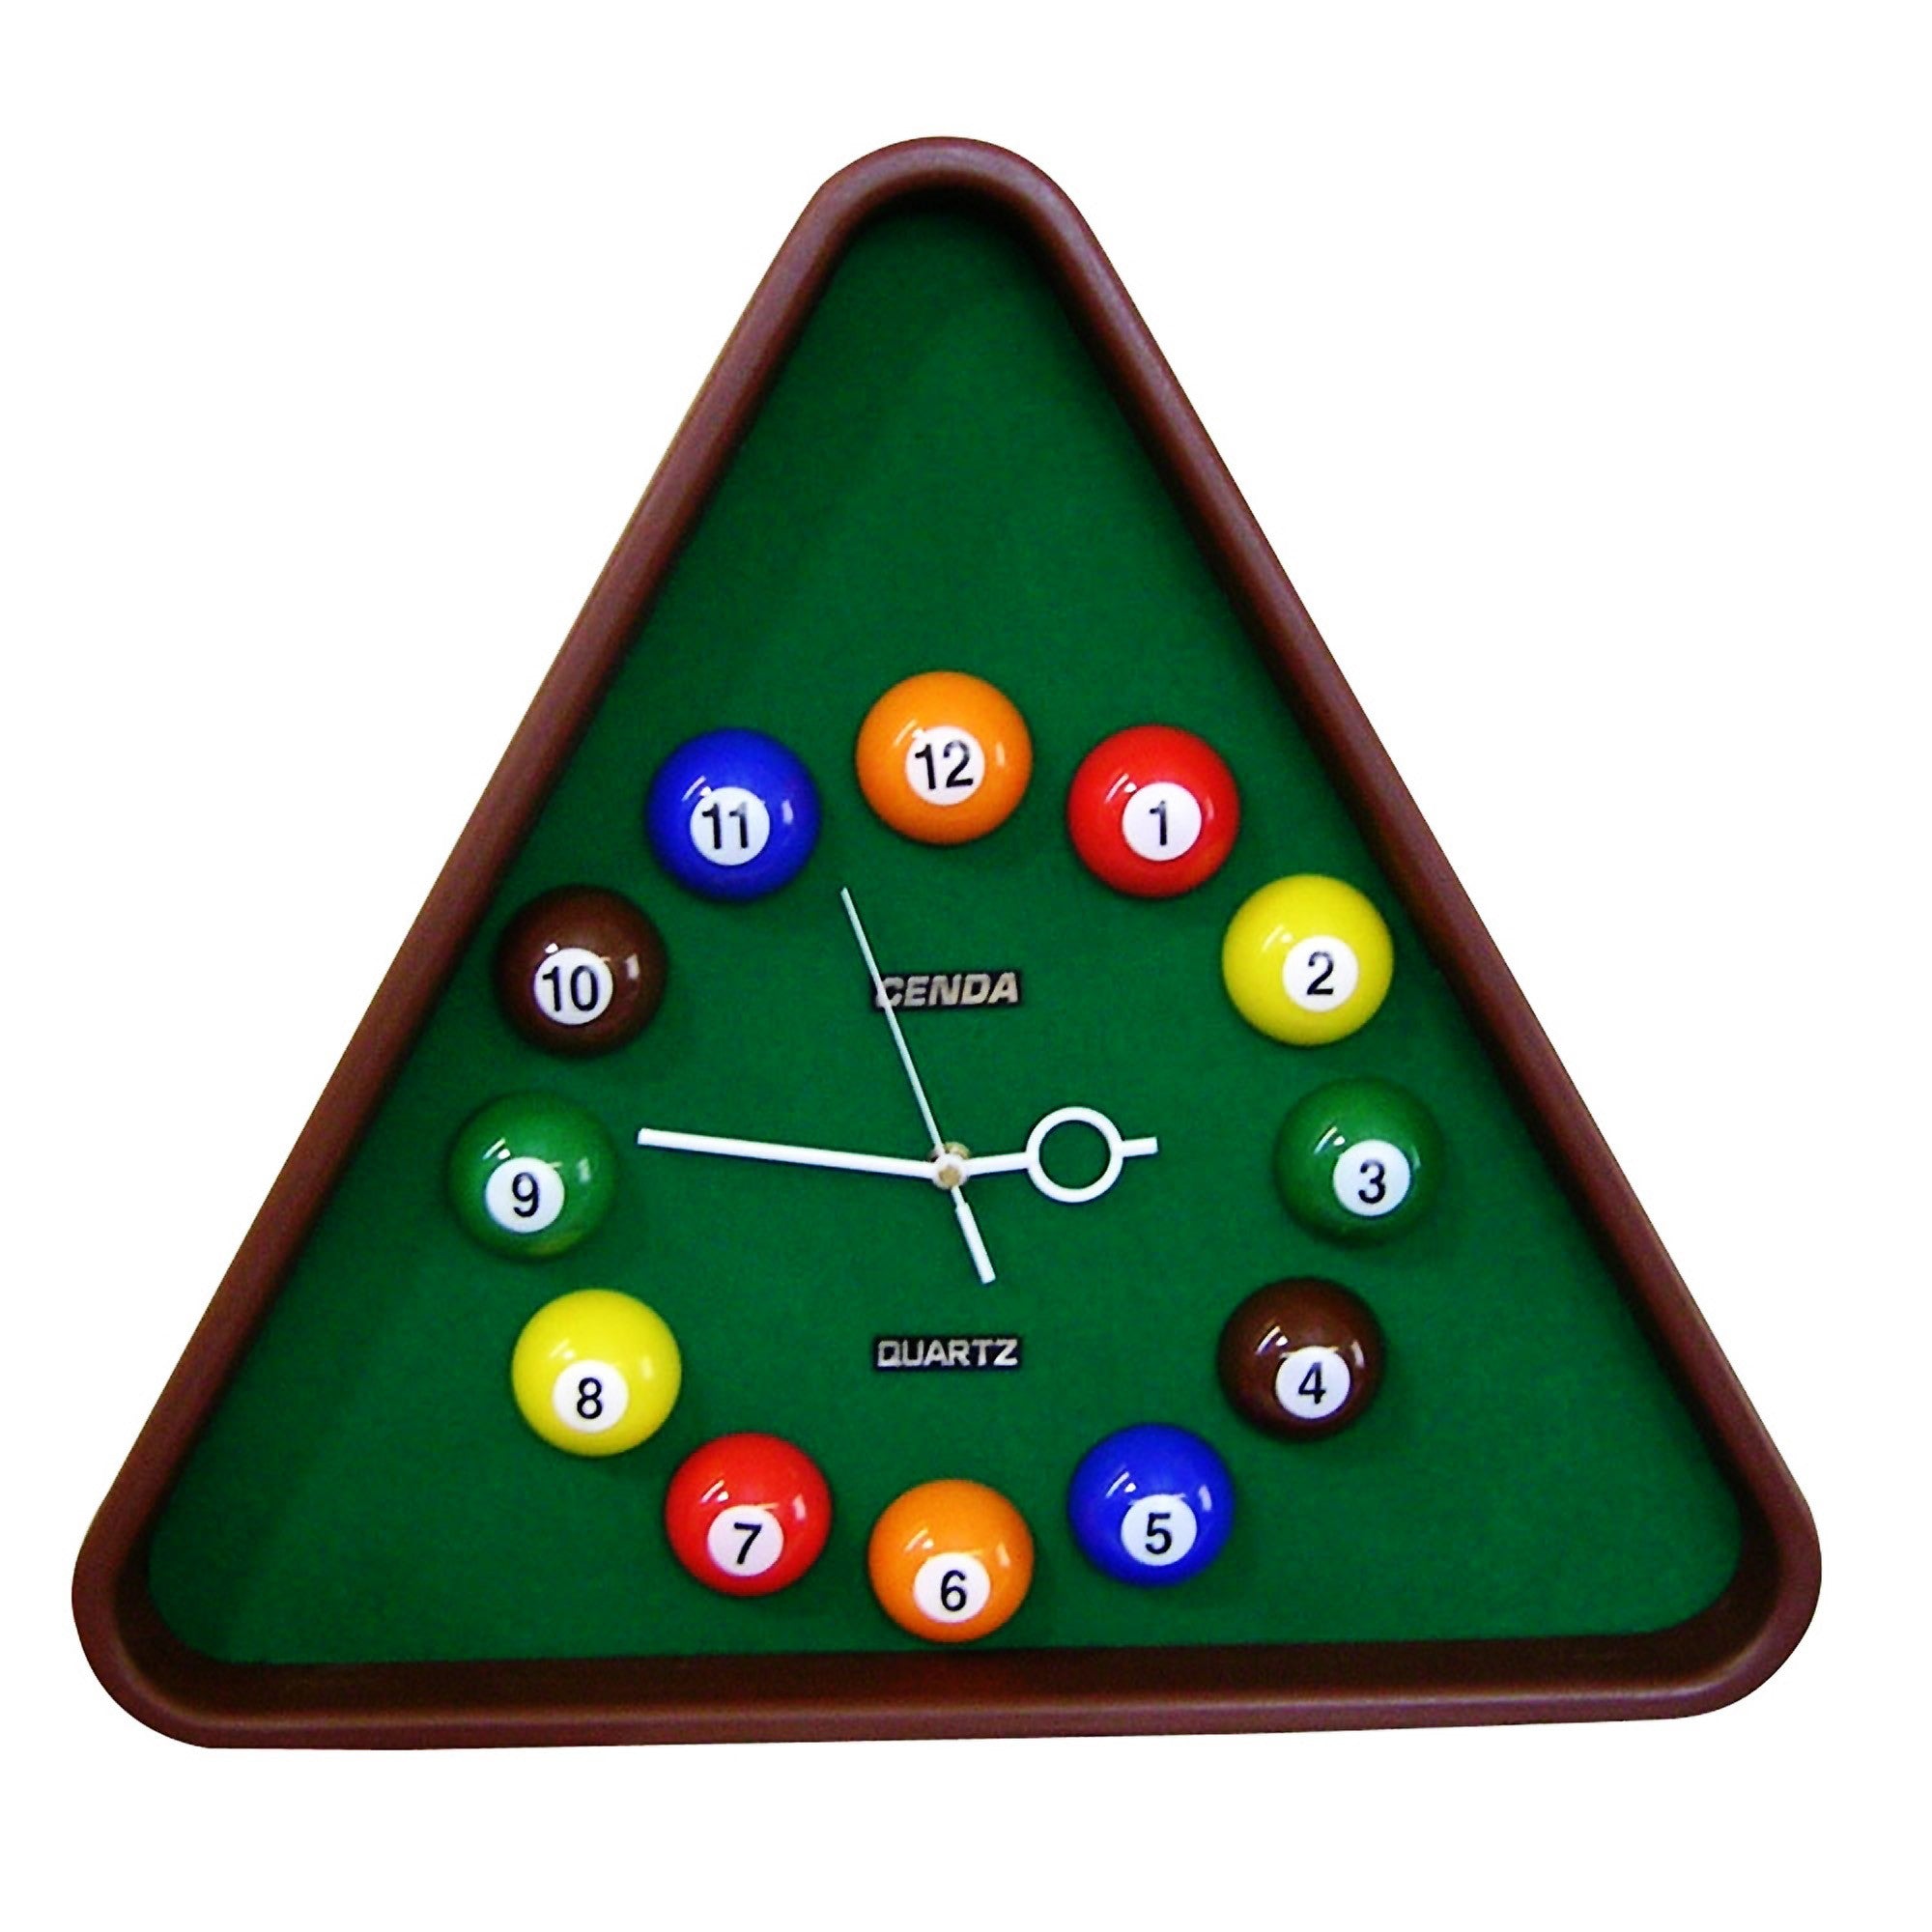 21" Triangle Green Resin Analog Billiards Wall Clock